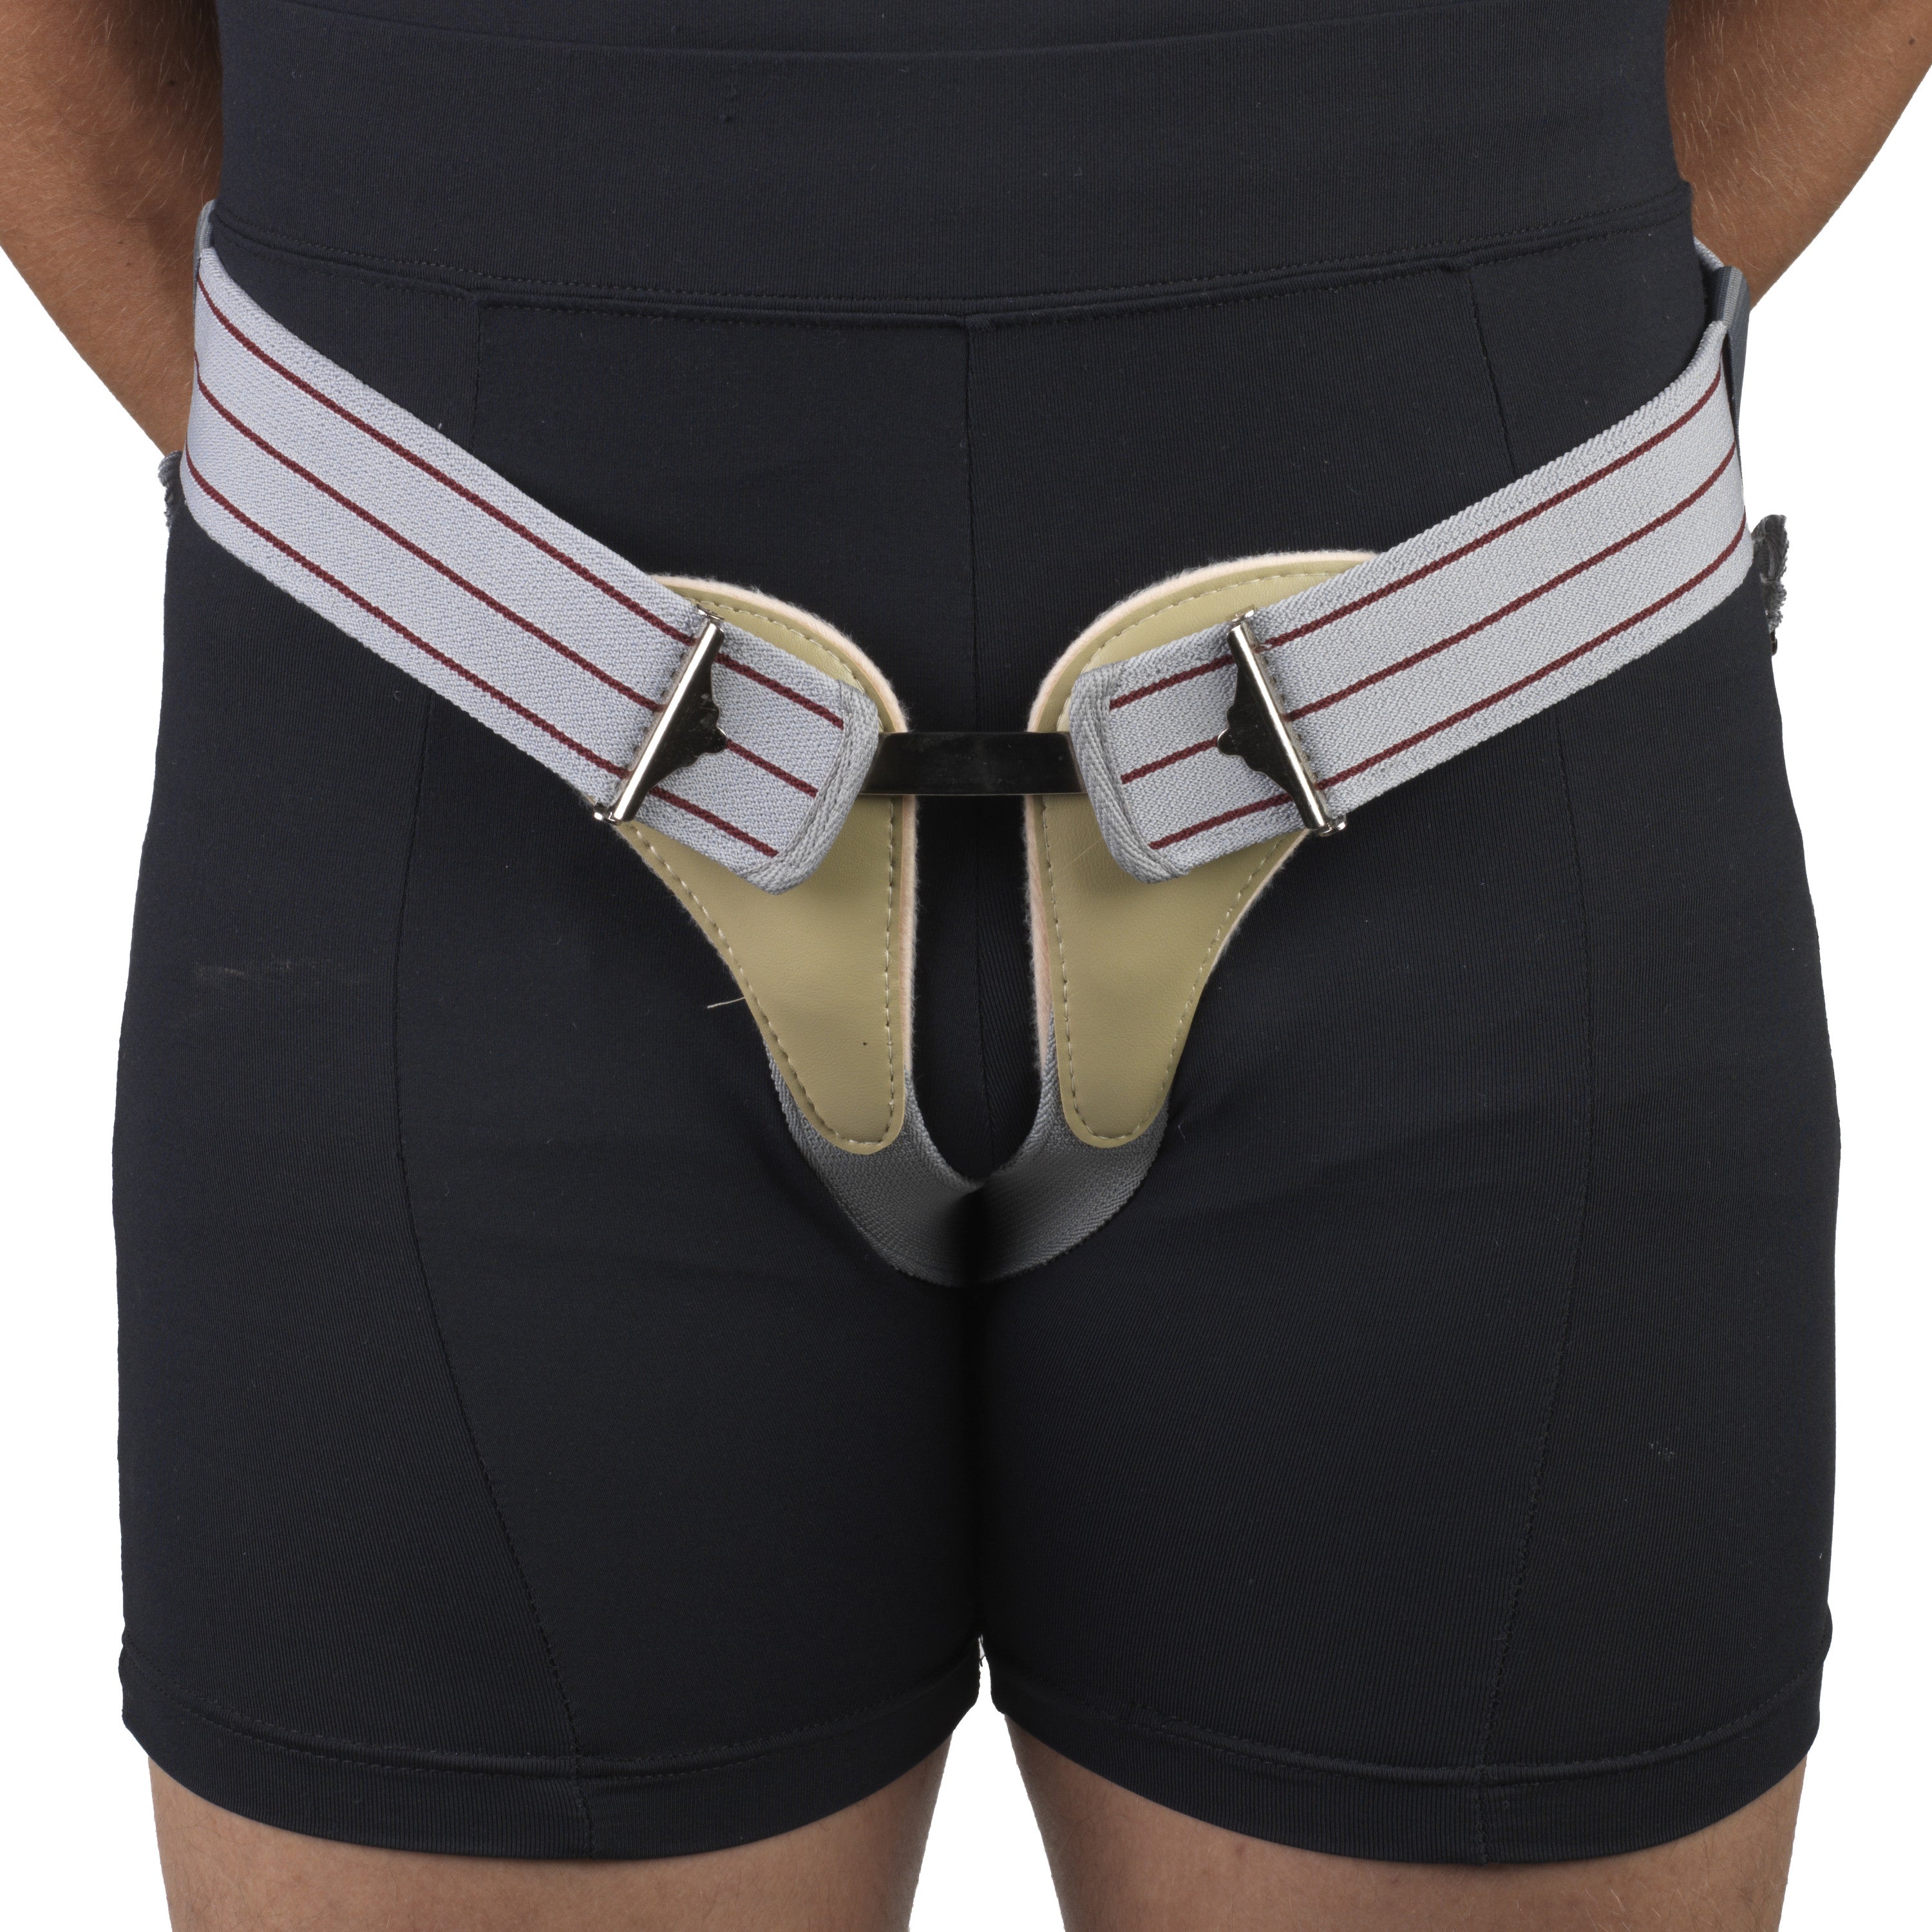 Black Hernia Belt for Men, Inguinal Hernia Support Belt Groin Truss Brace  Post Surgery Hernia Pain Relief, Adjustable Elastic Belt Men -  Canada